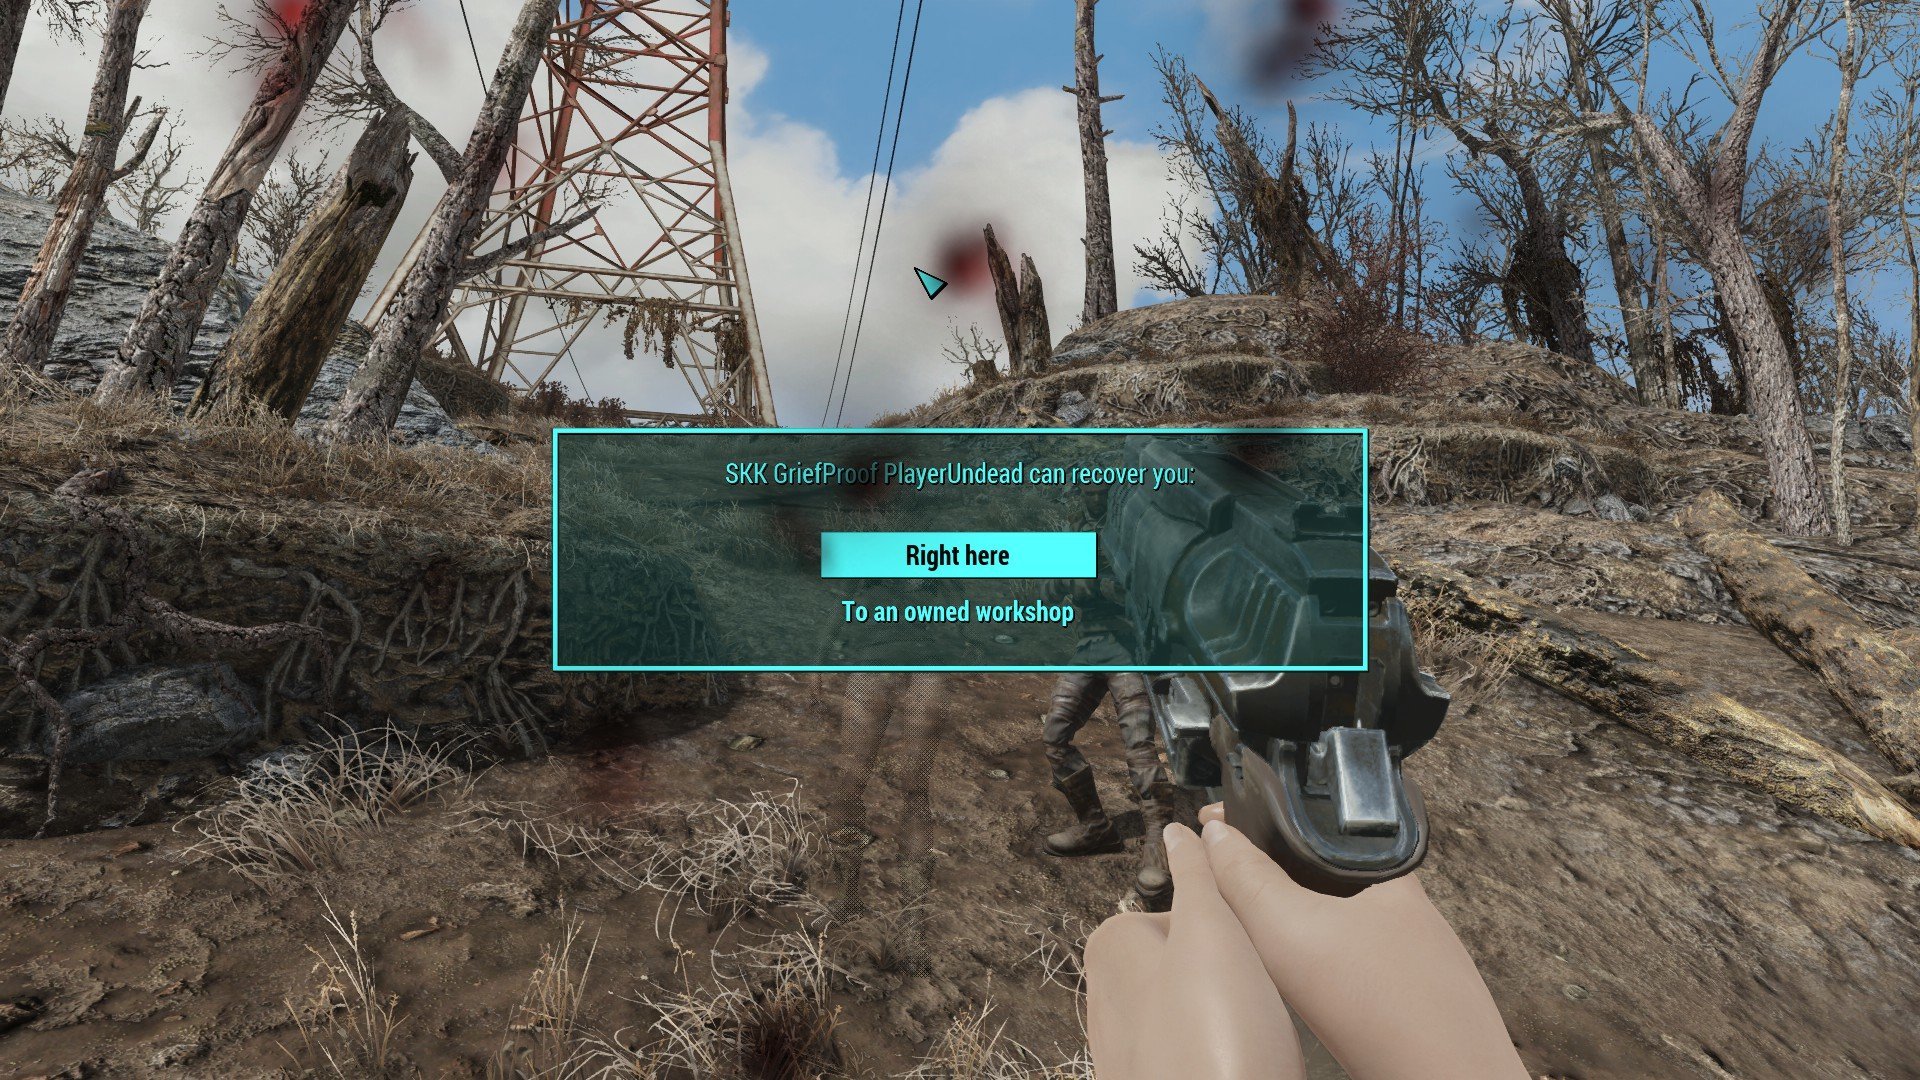 Elizabeth Race Mod For Fallout 3 - ModDB